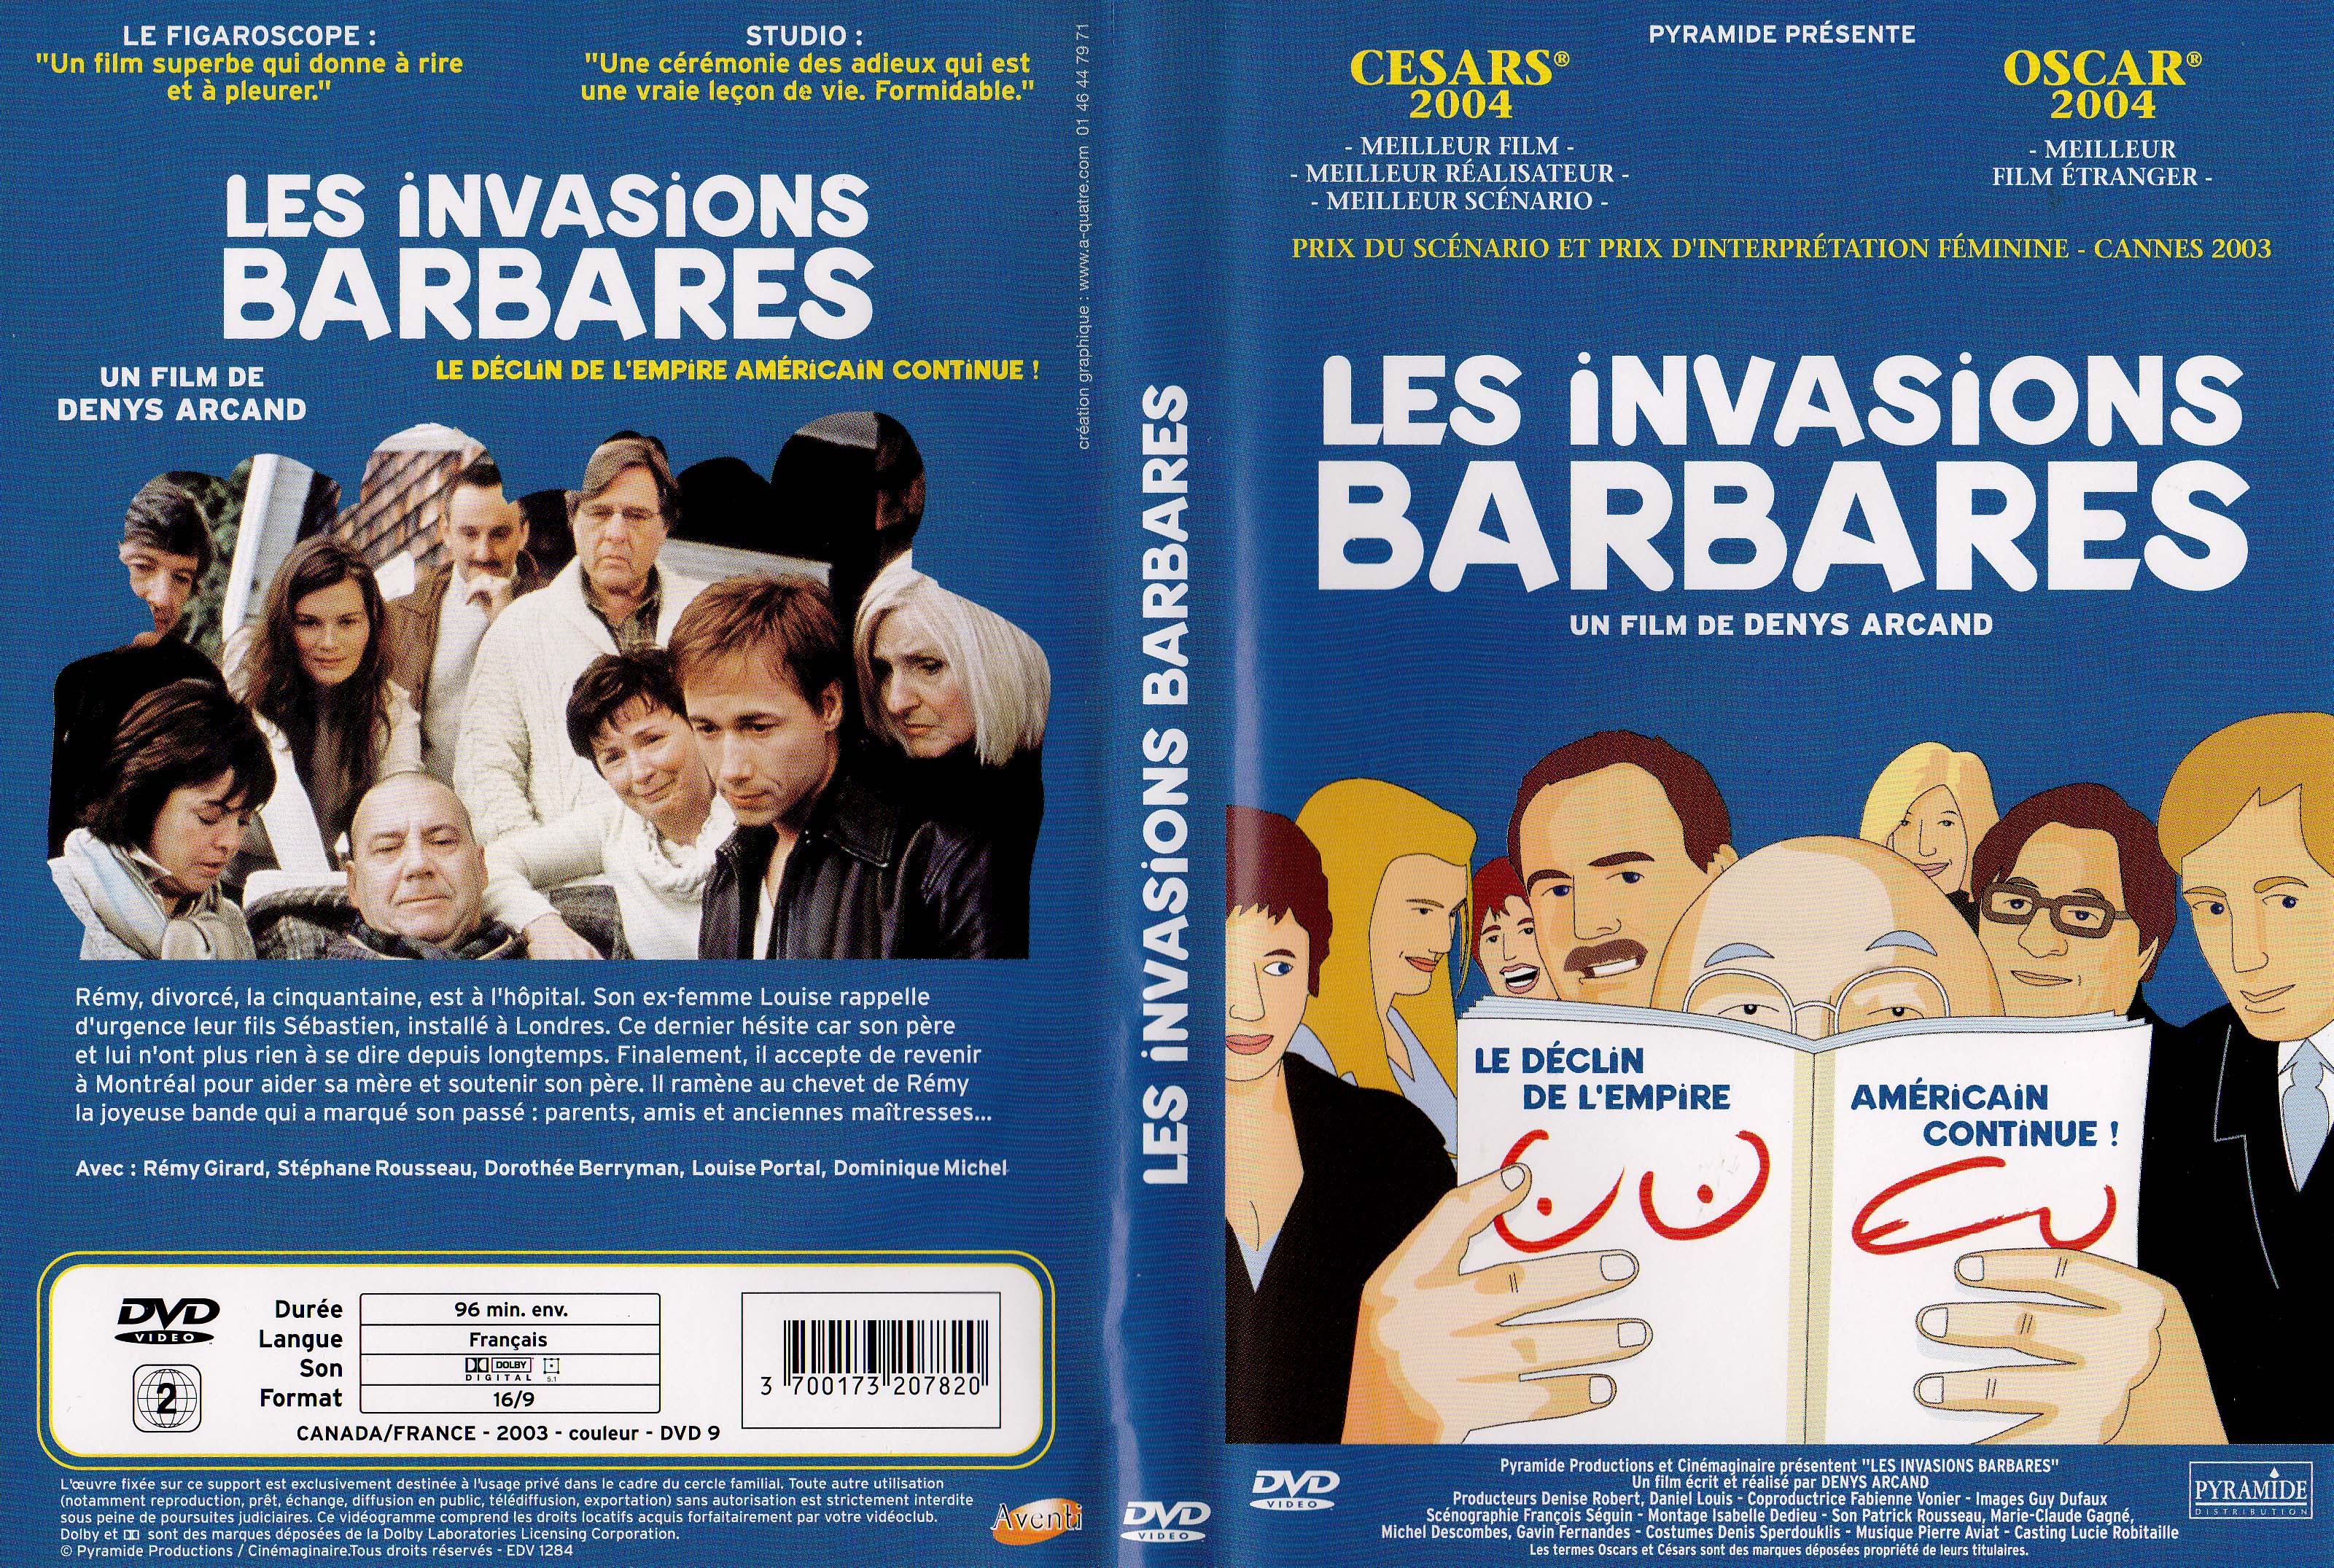 Jaquette DVD Les invasions barbares v3